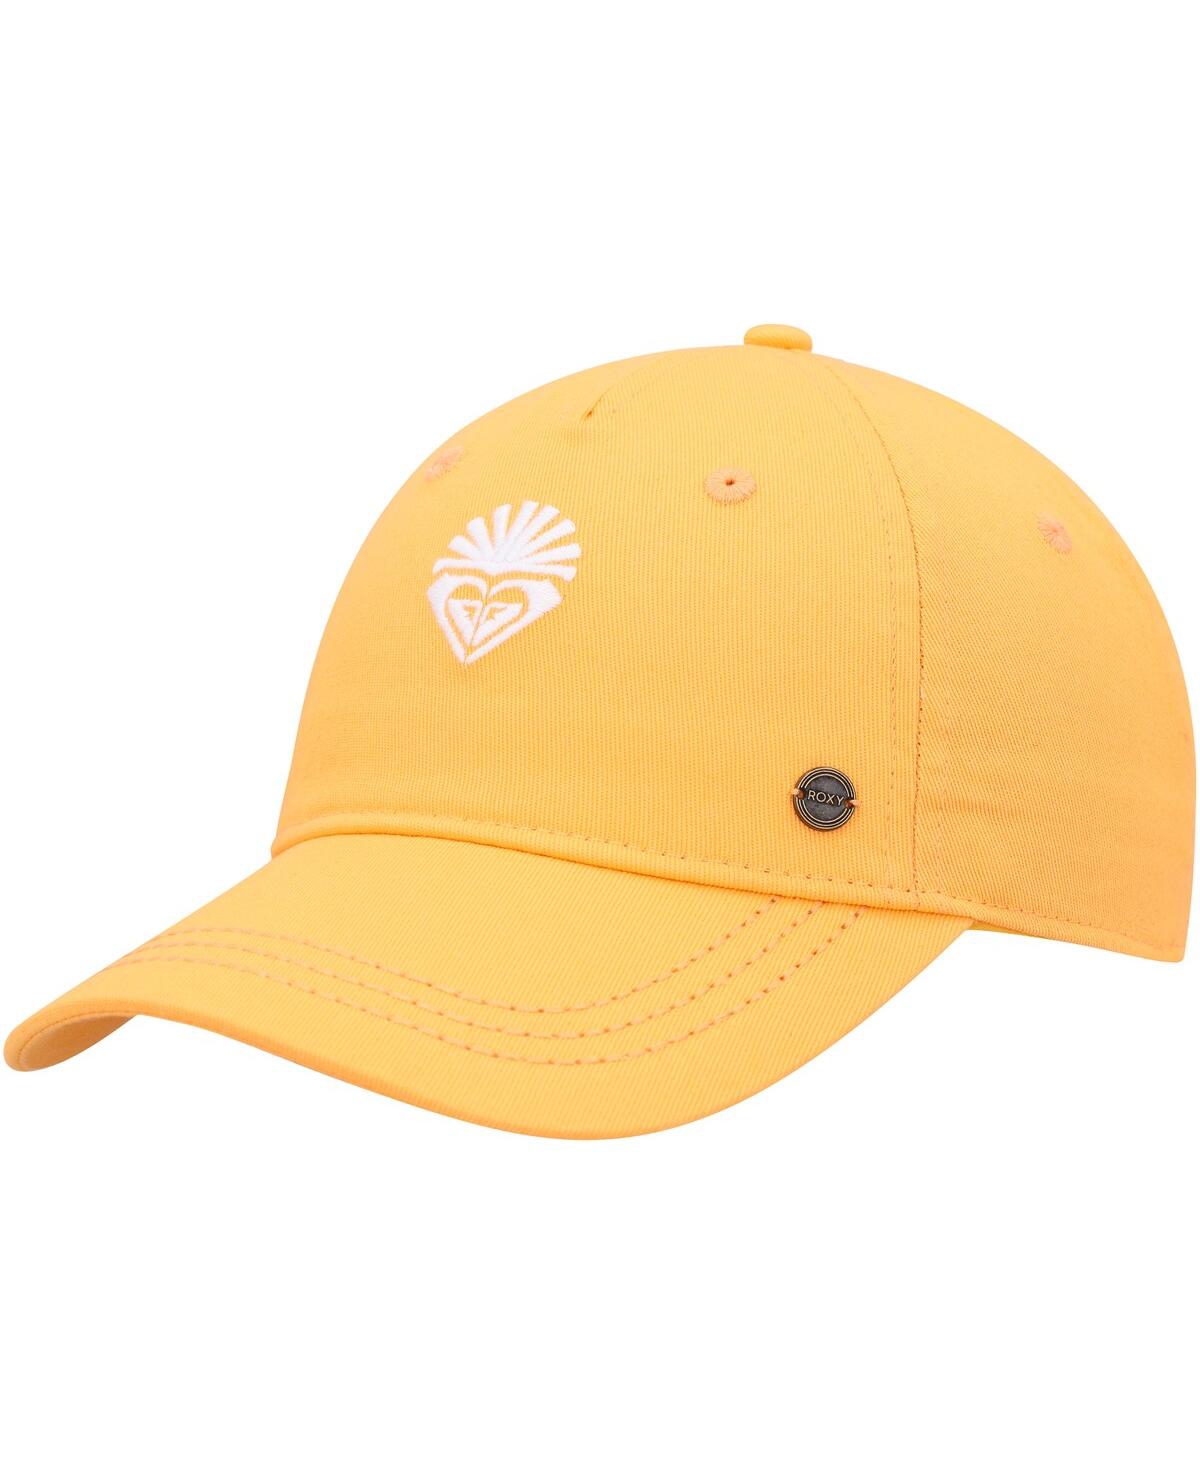 Roxy Women's  Orange Next Level Adjustable Hat